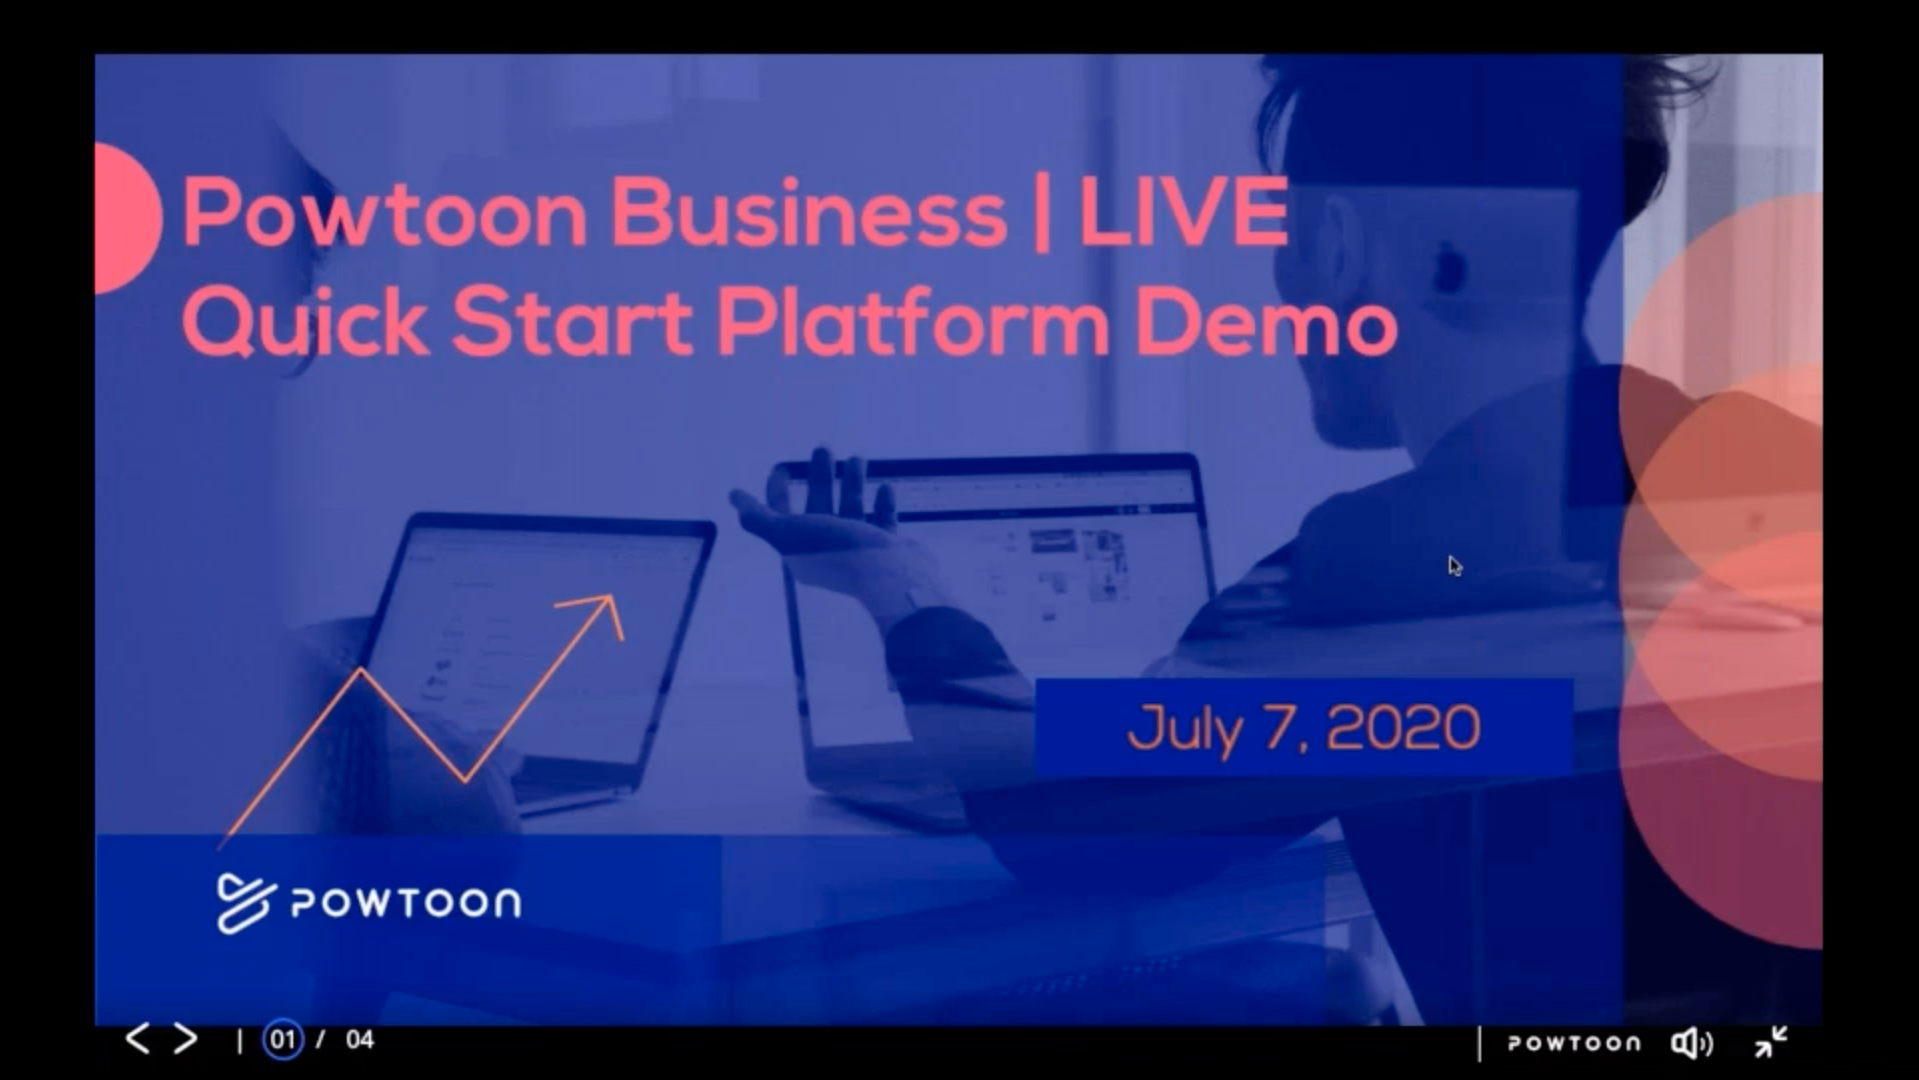 Powtoon Business Quick Start Platform Demo #1